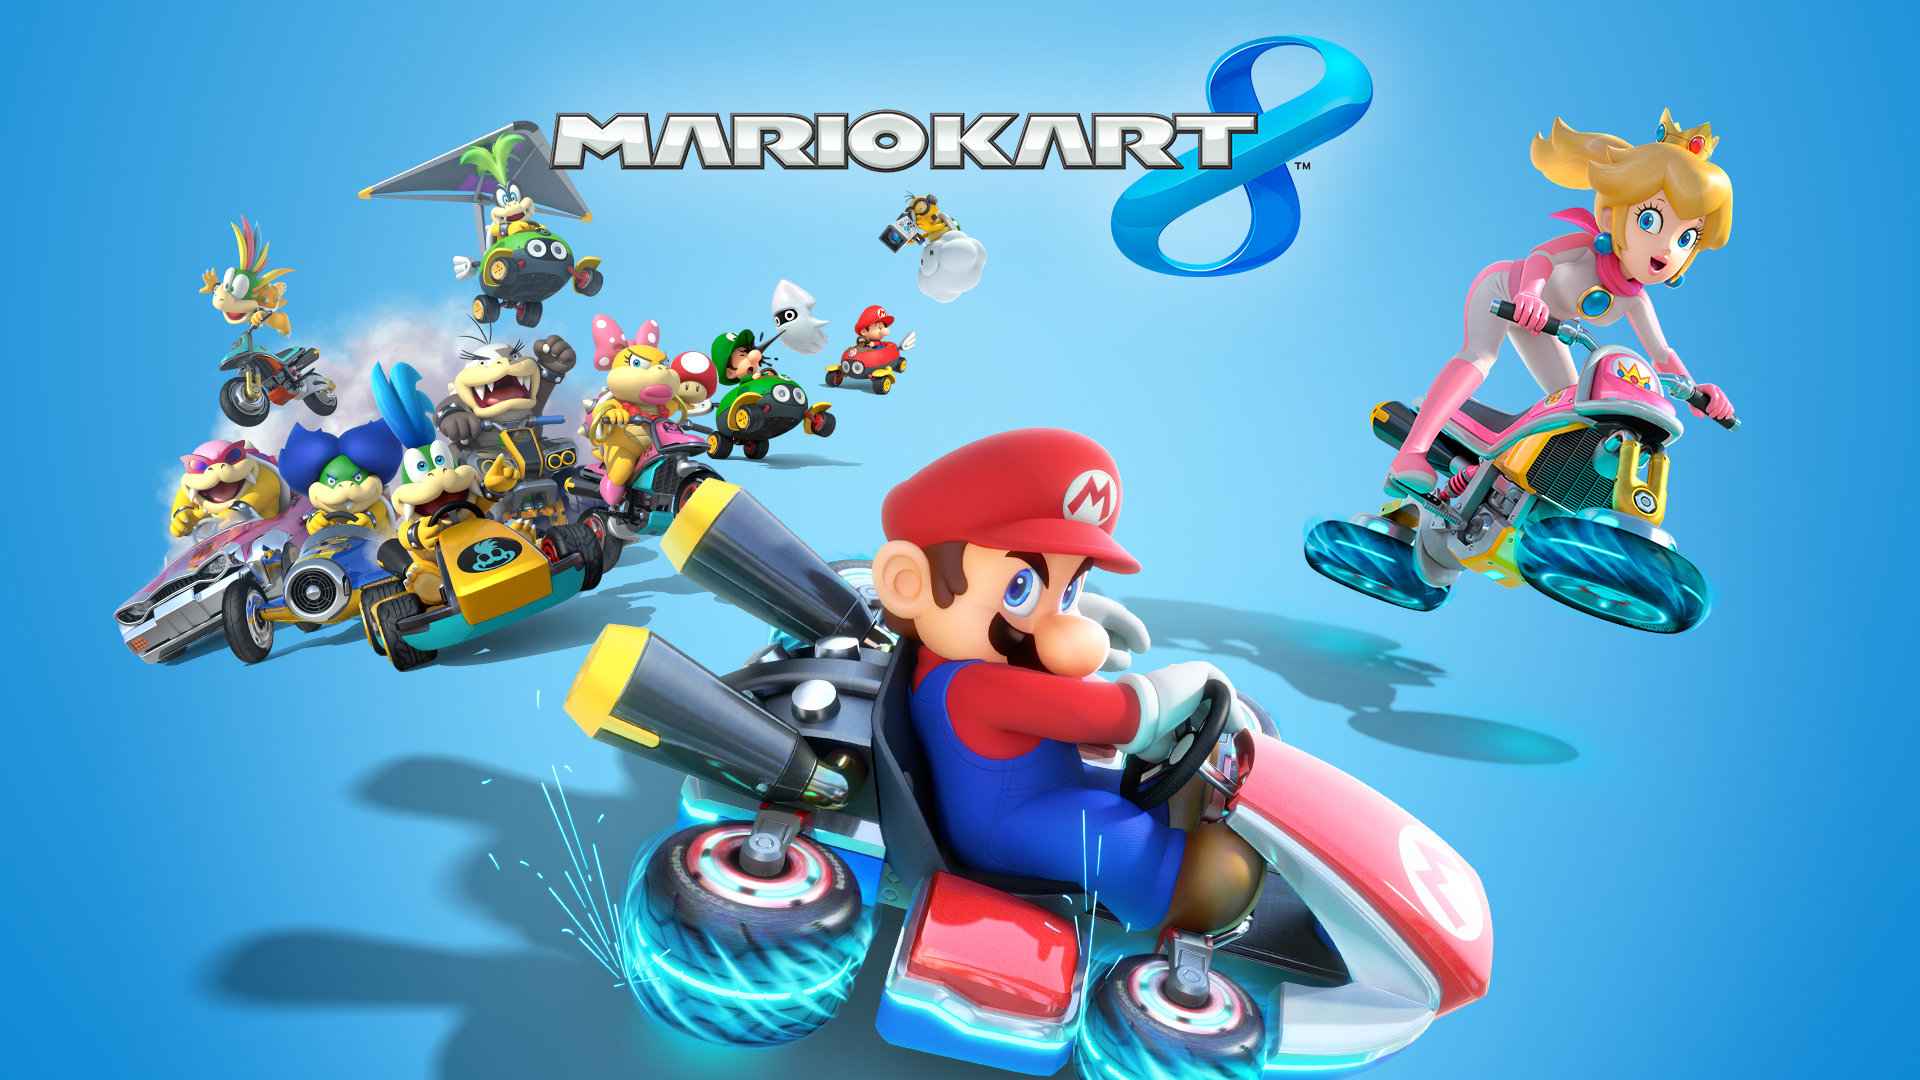 Download full hd 1080p Mario Kart 8 PC wallpaper ID:433289 for free